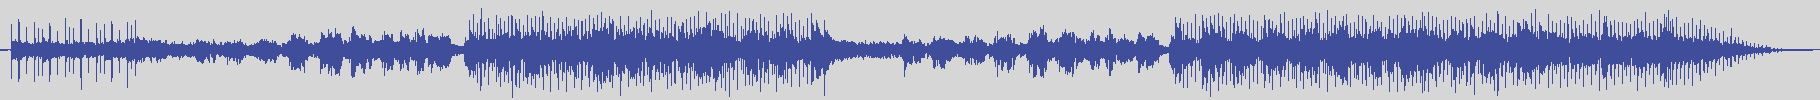 digiphonic_records [DPR006] Nino D'Angelo - Ribaltabile Giù [Original Mix] audio wave form